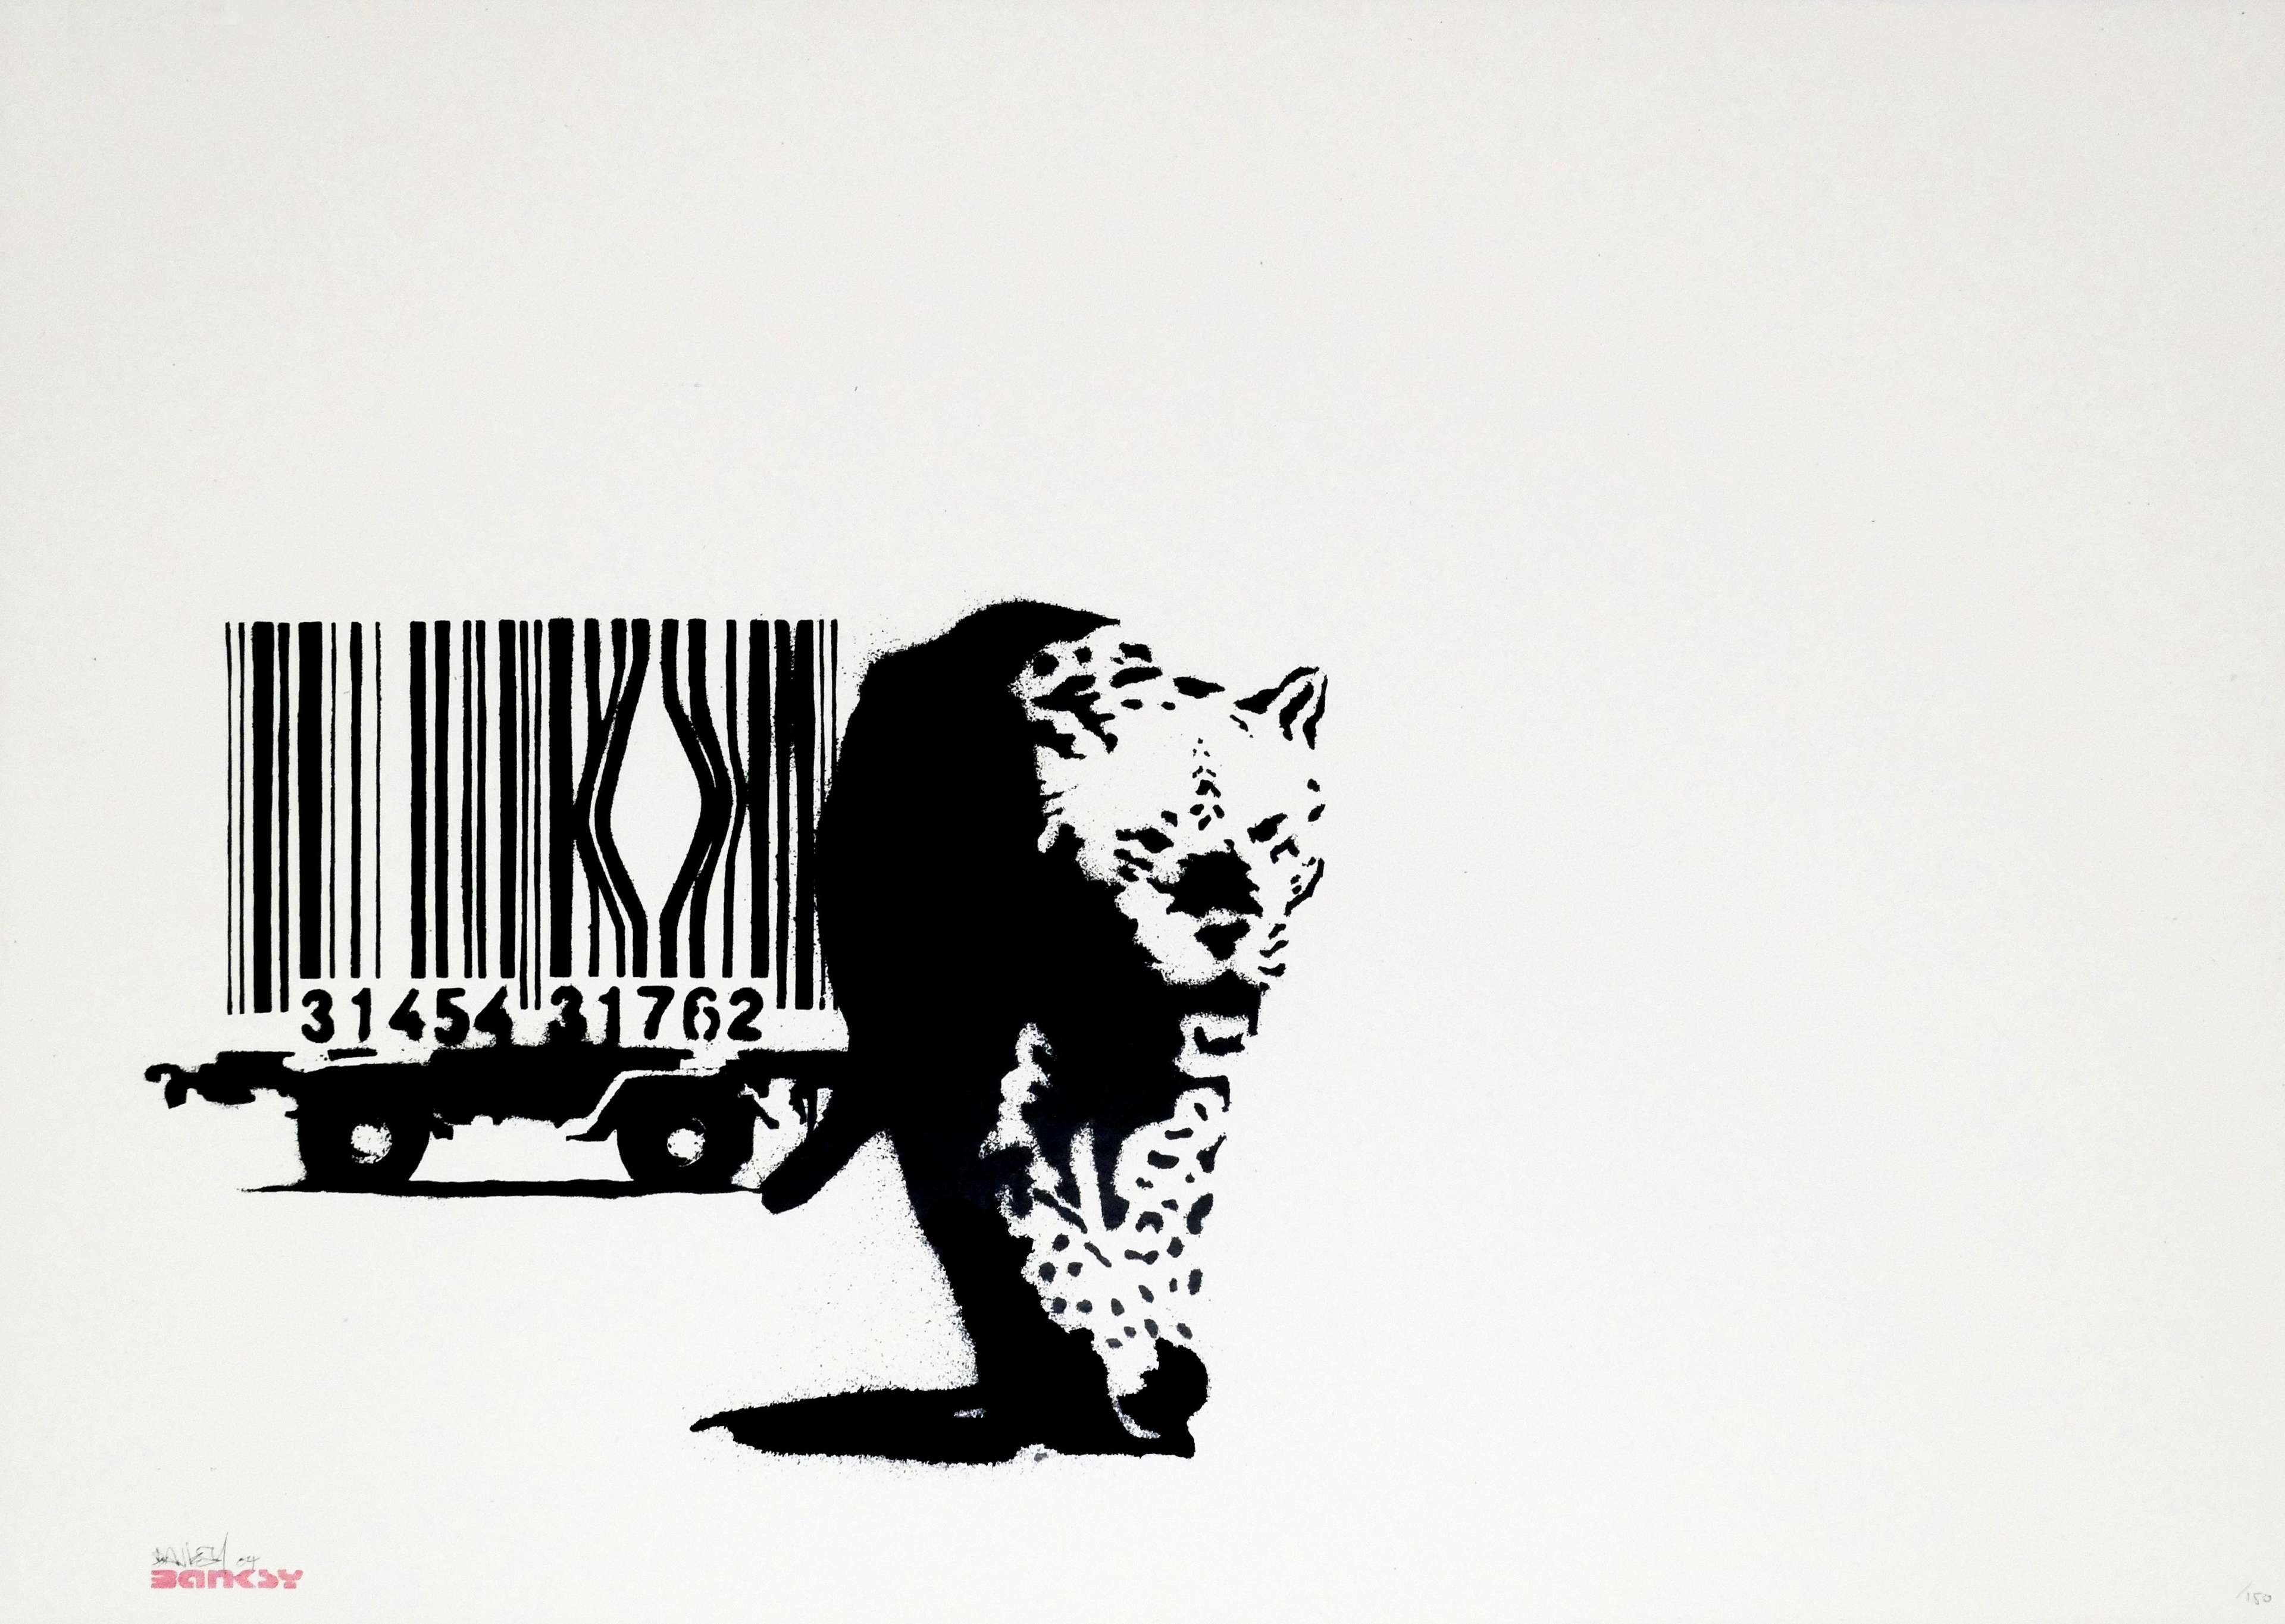 Barcode by Banksy - MyArtBroker